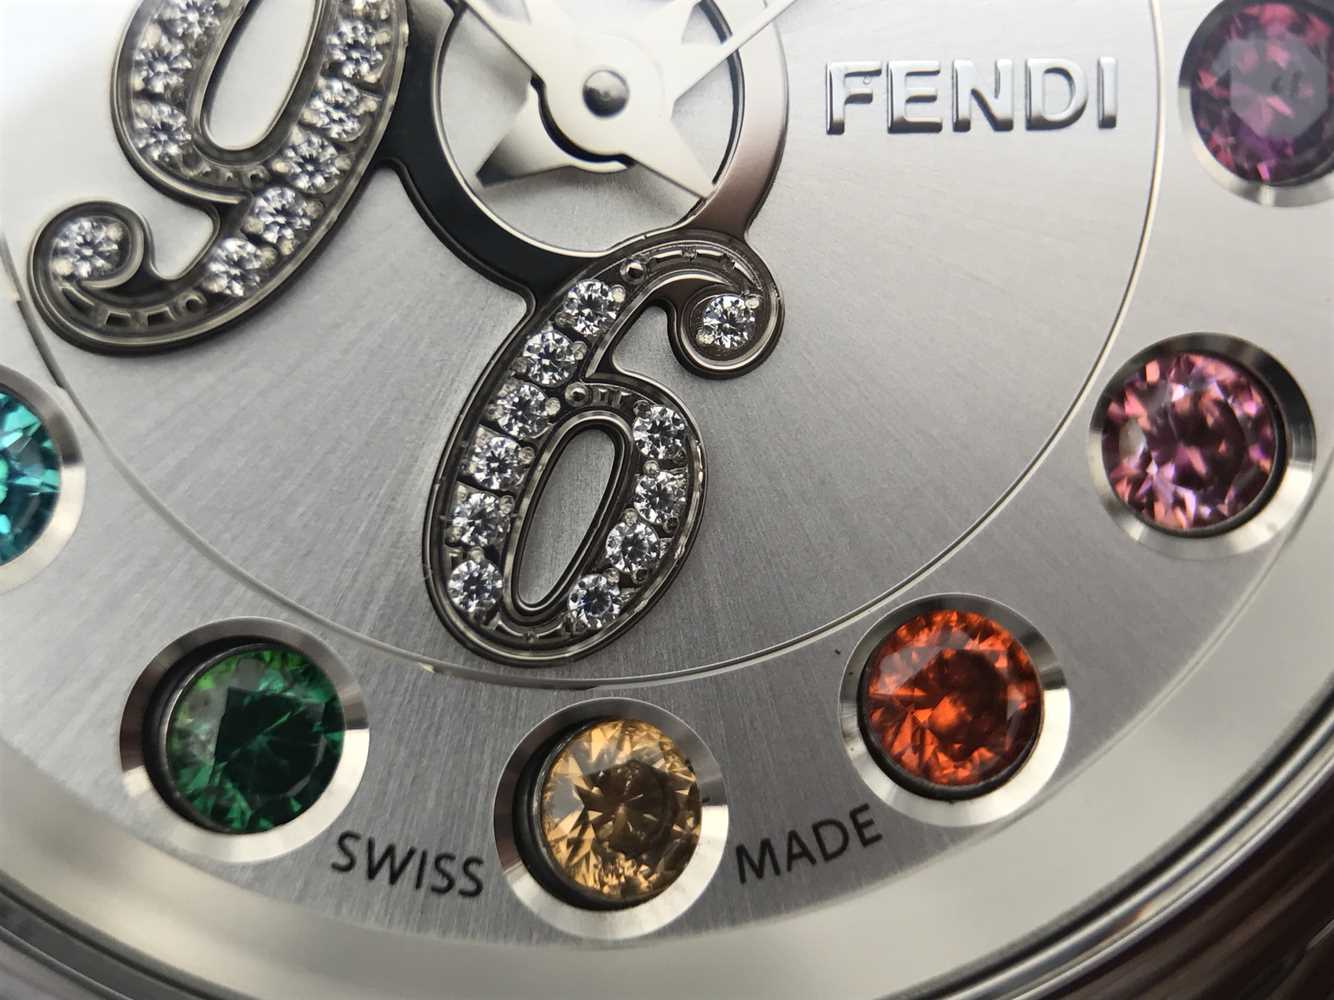 2022122914050164 - XF芬迪變色珠寶女士手錶￥1790